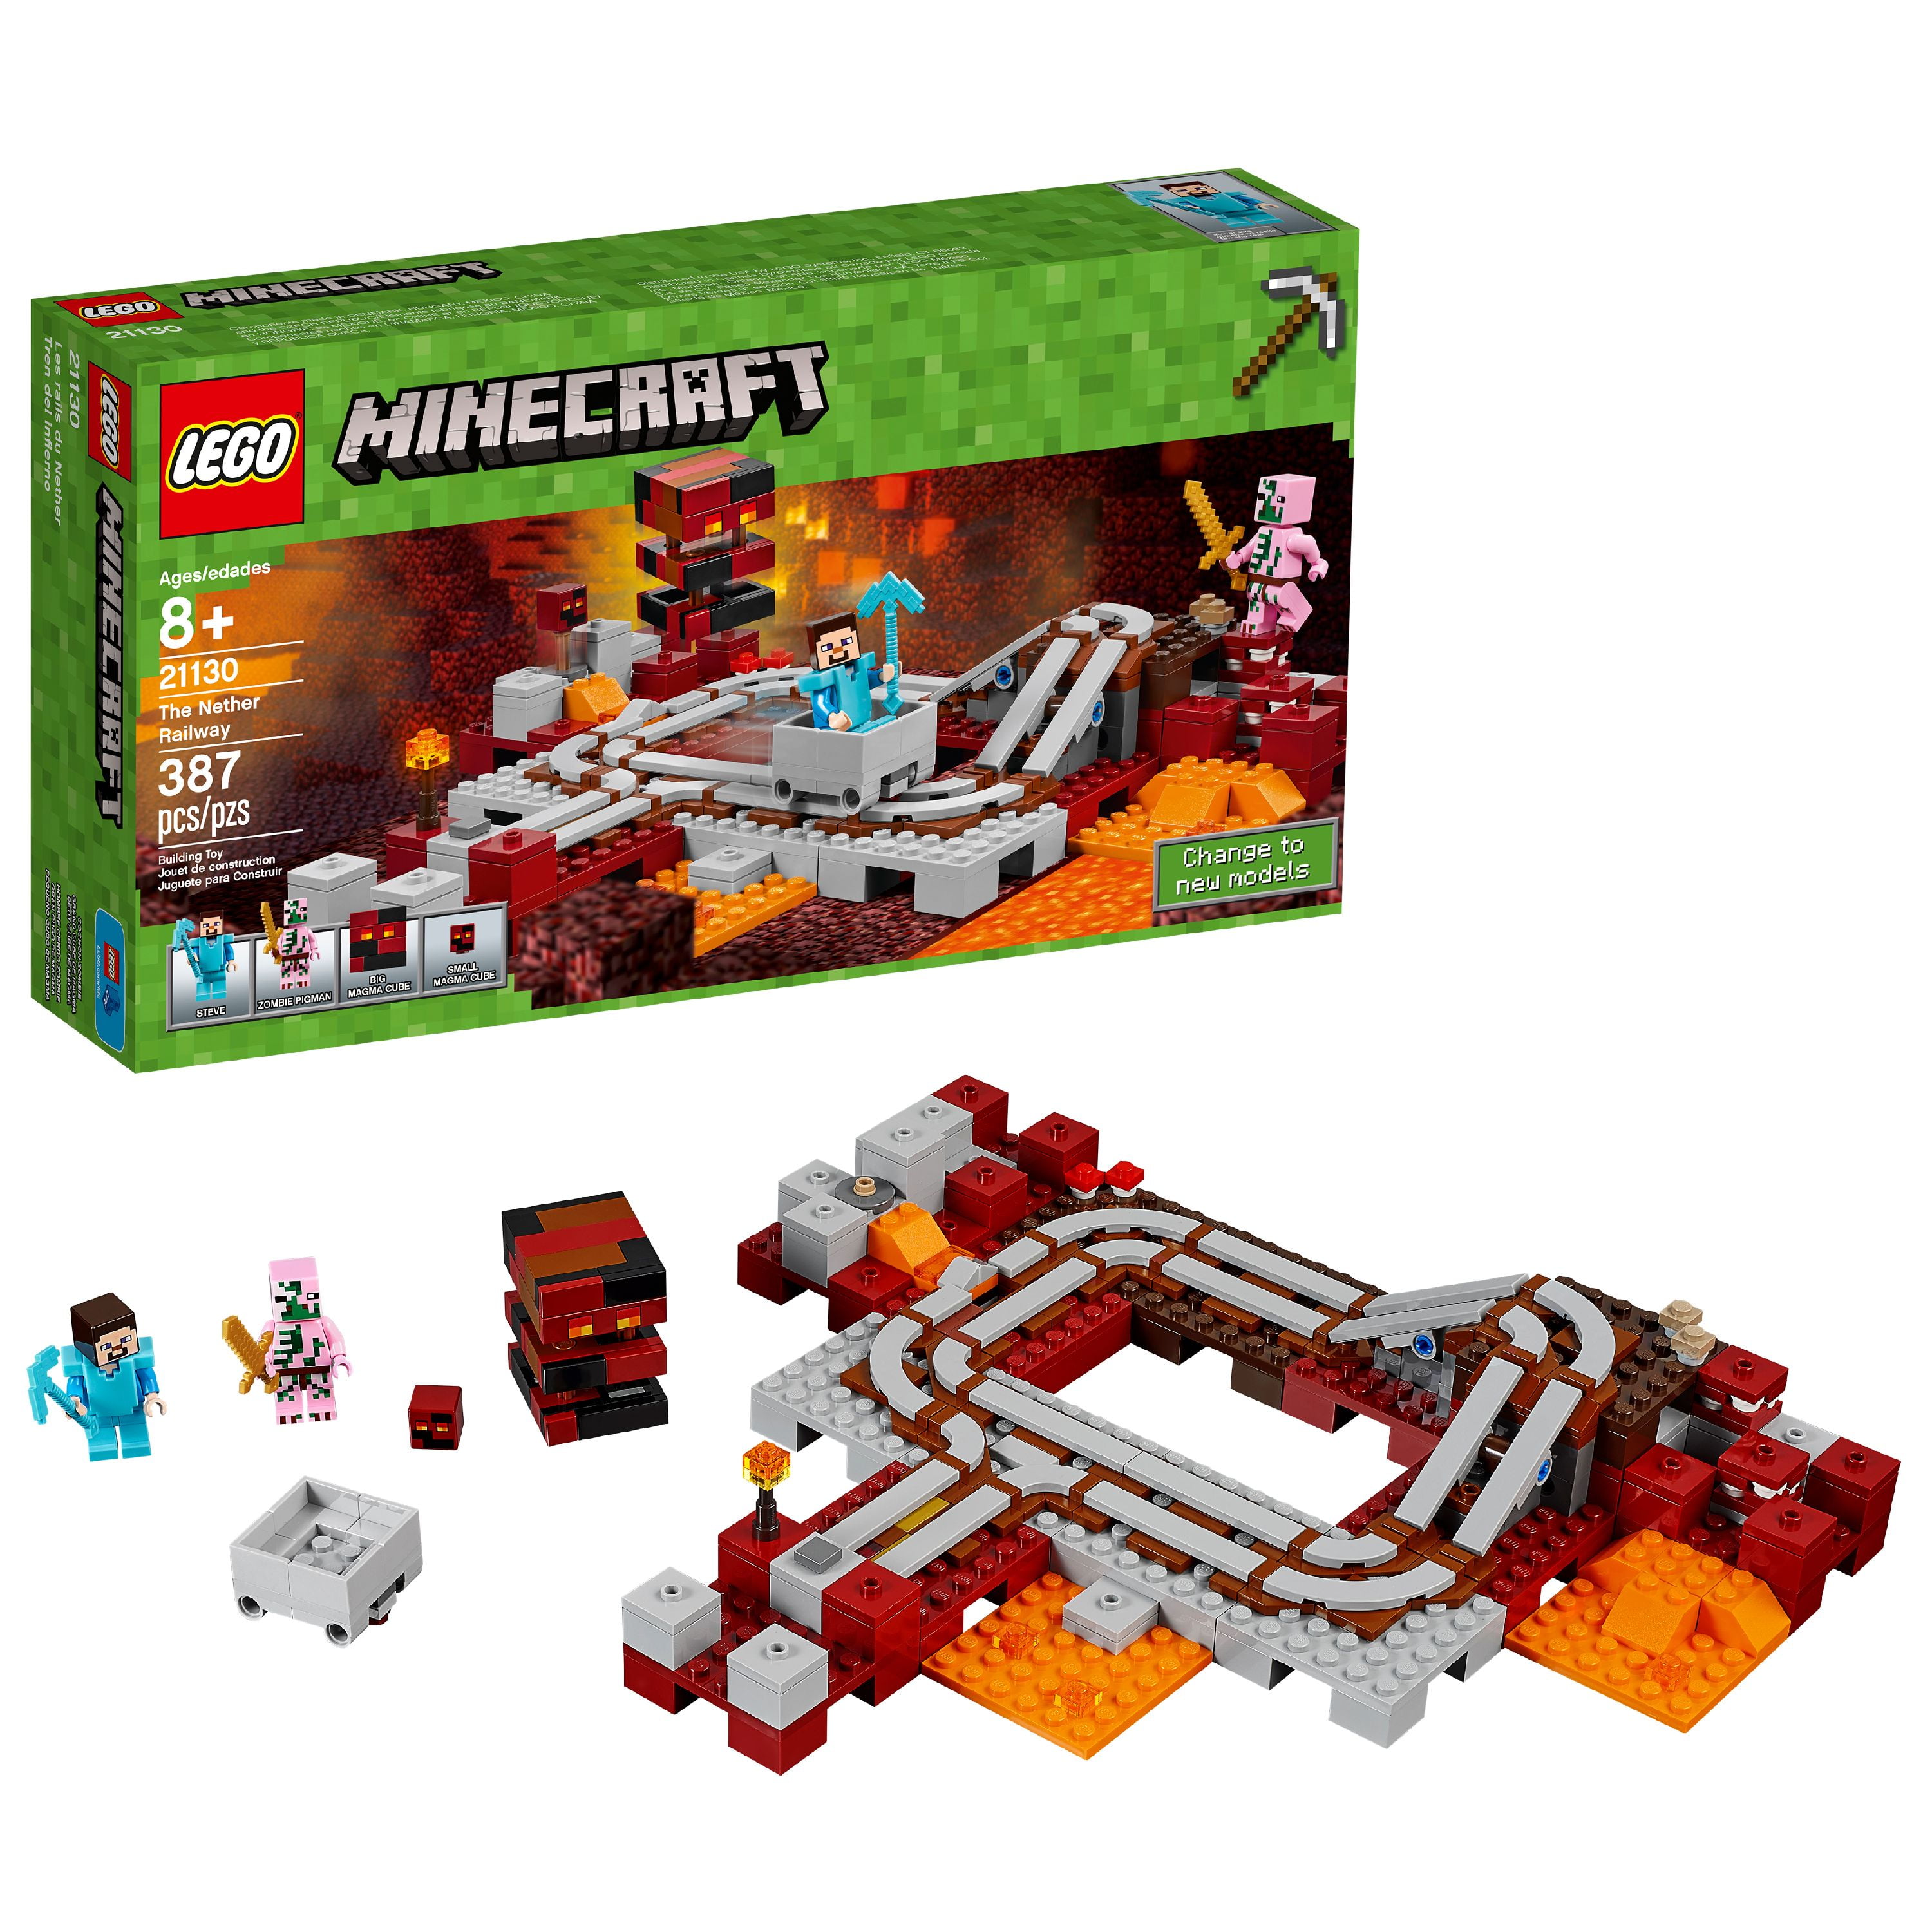 LEGO Minecraft The Nether Railway 21130 (387 Pieces)